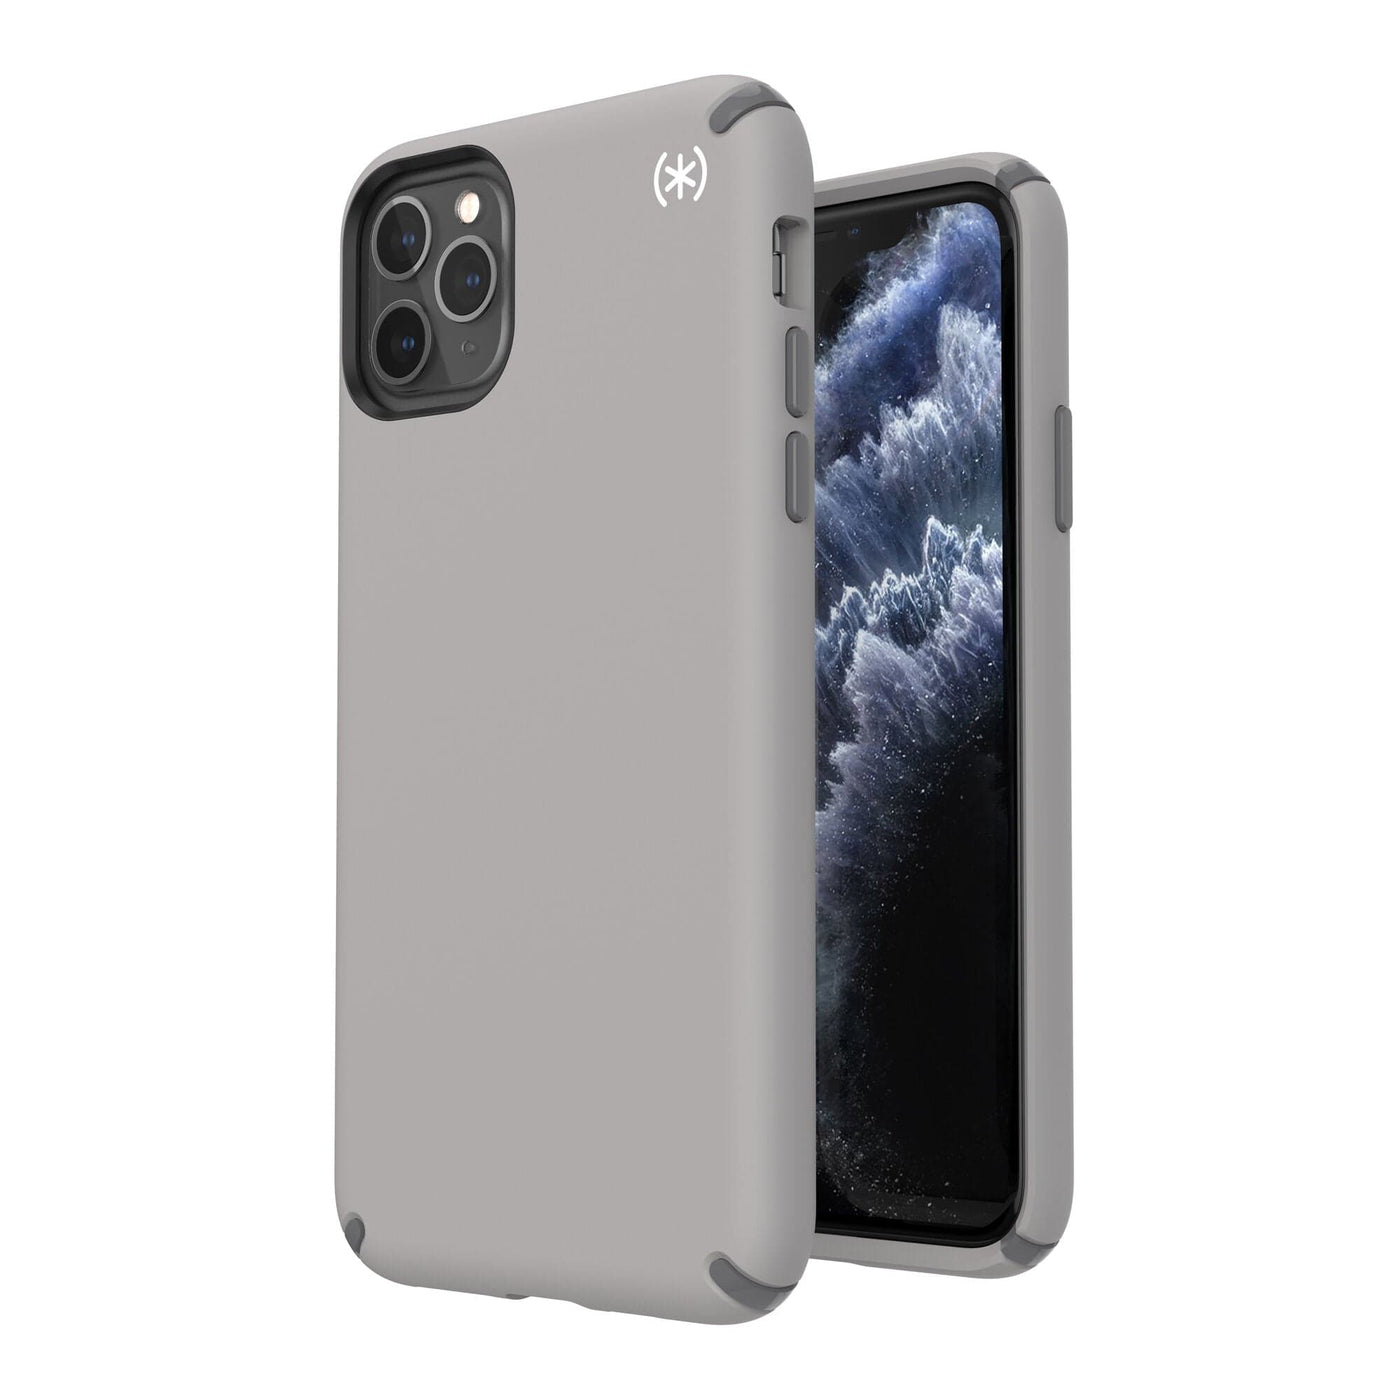 Speck Presidio2 Pro iPhone 11 Pro Max Cases Best iPhone 11 Pro Max - $44.99